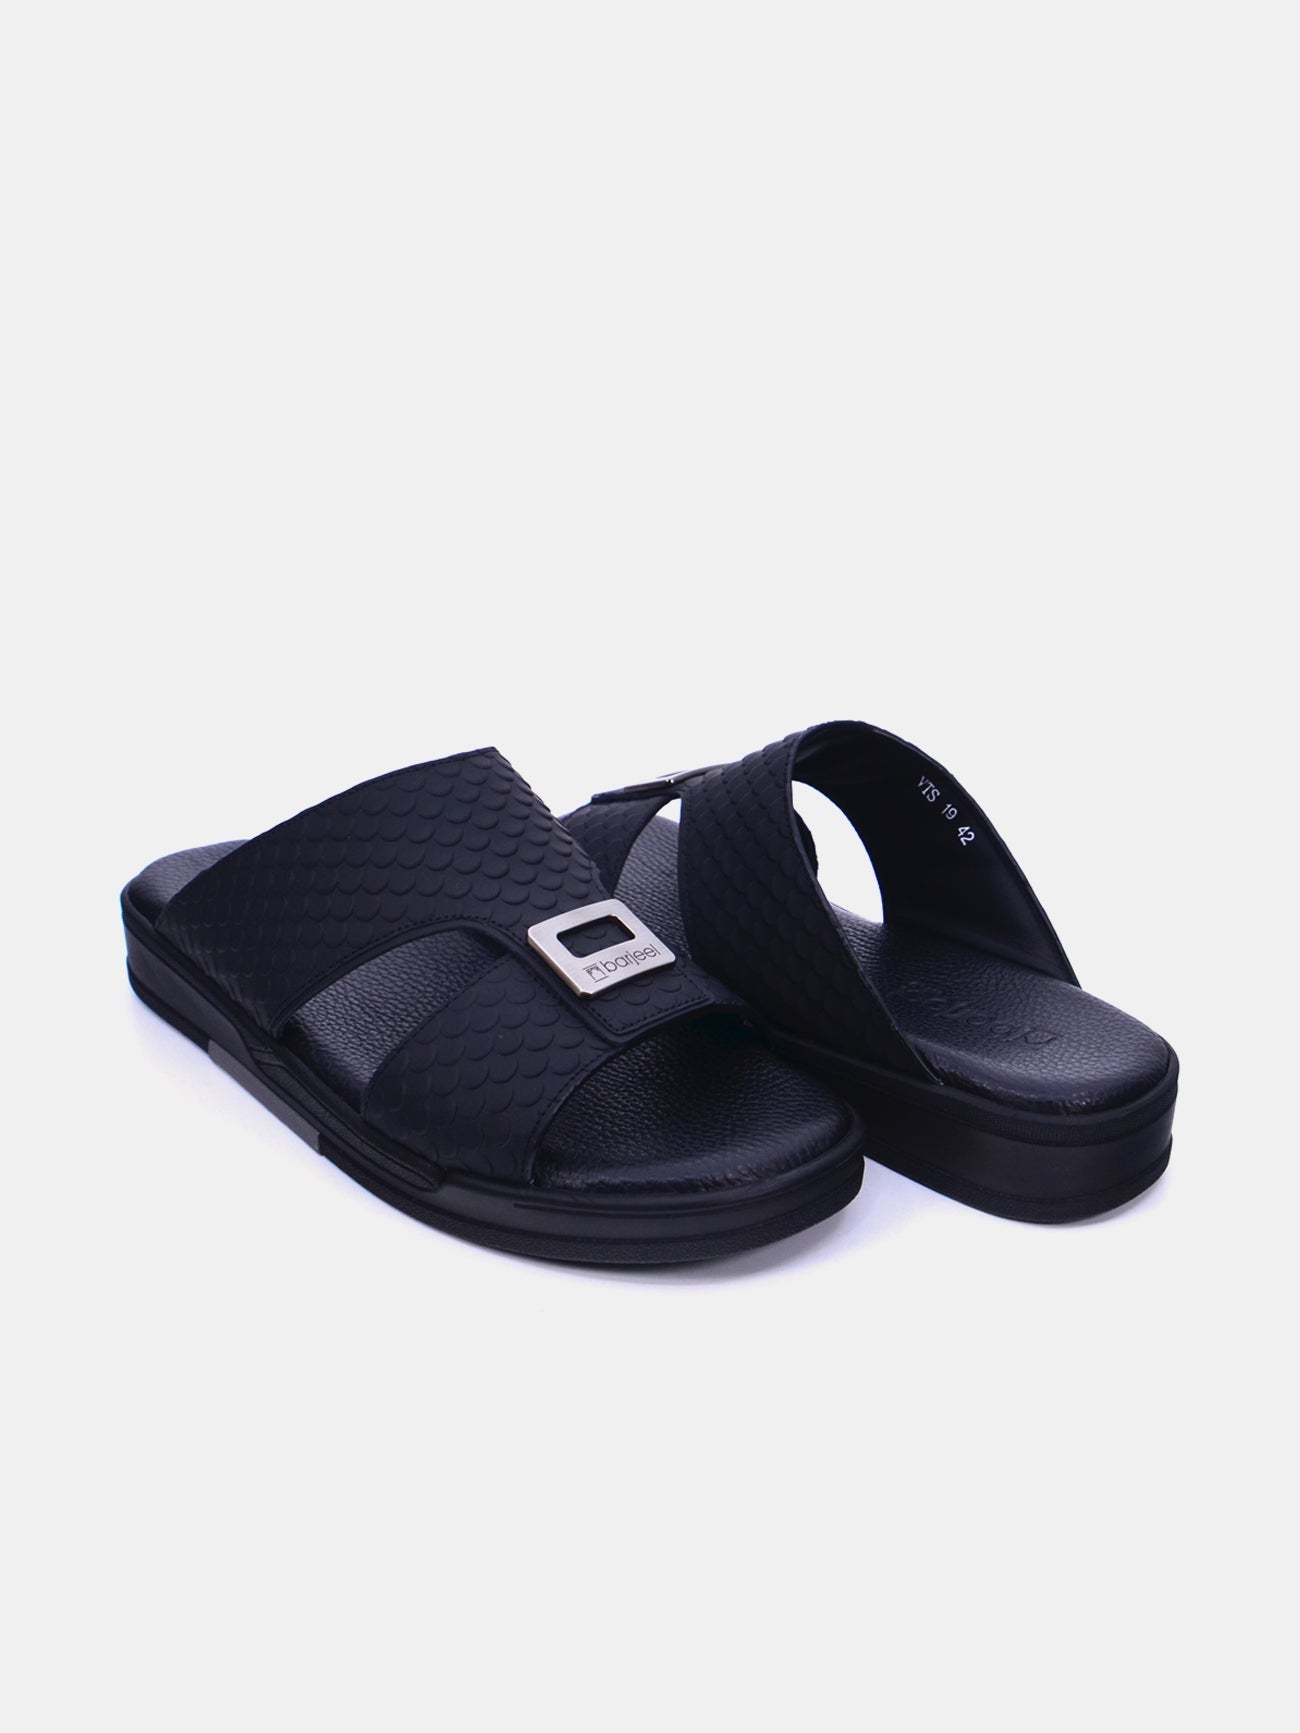 Barjeel Uno VTS 19 Men's Sandals #color_Black